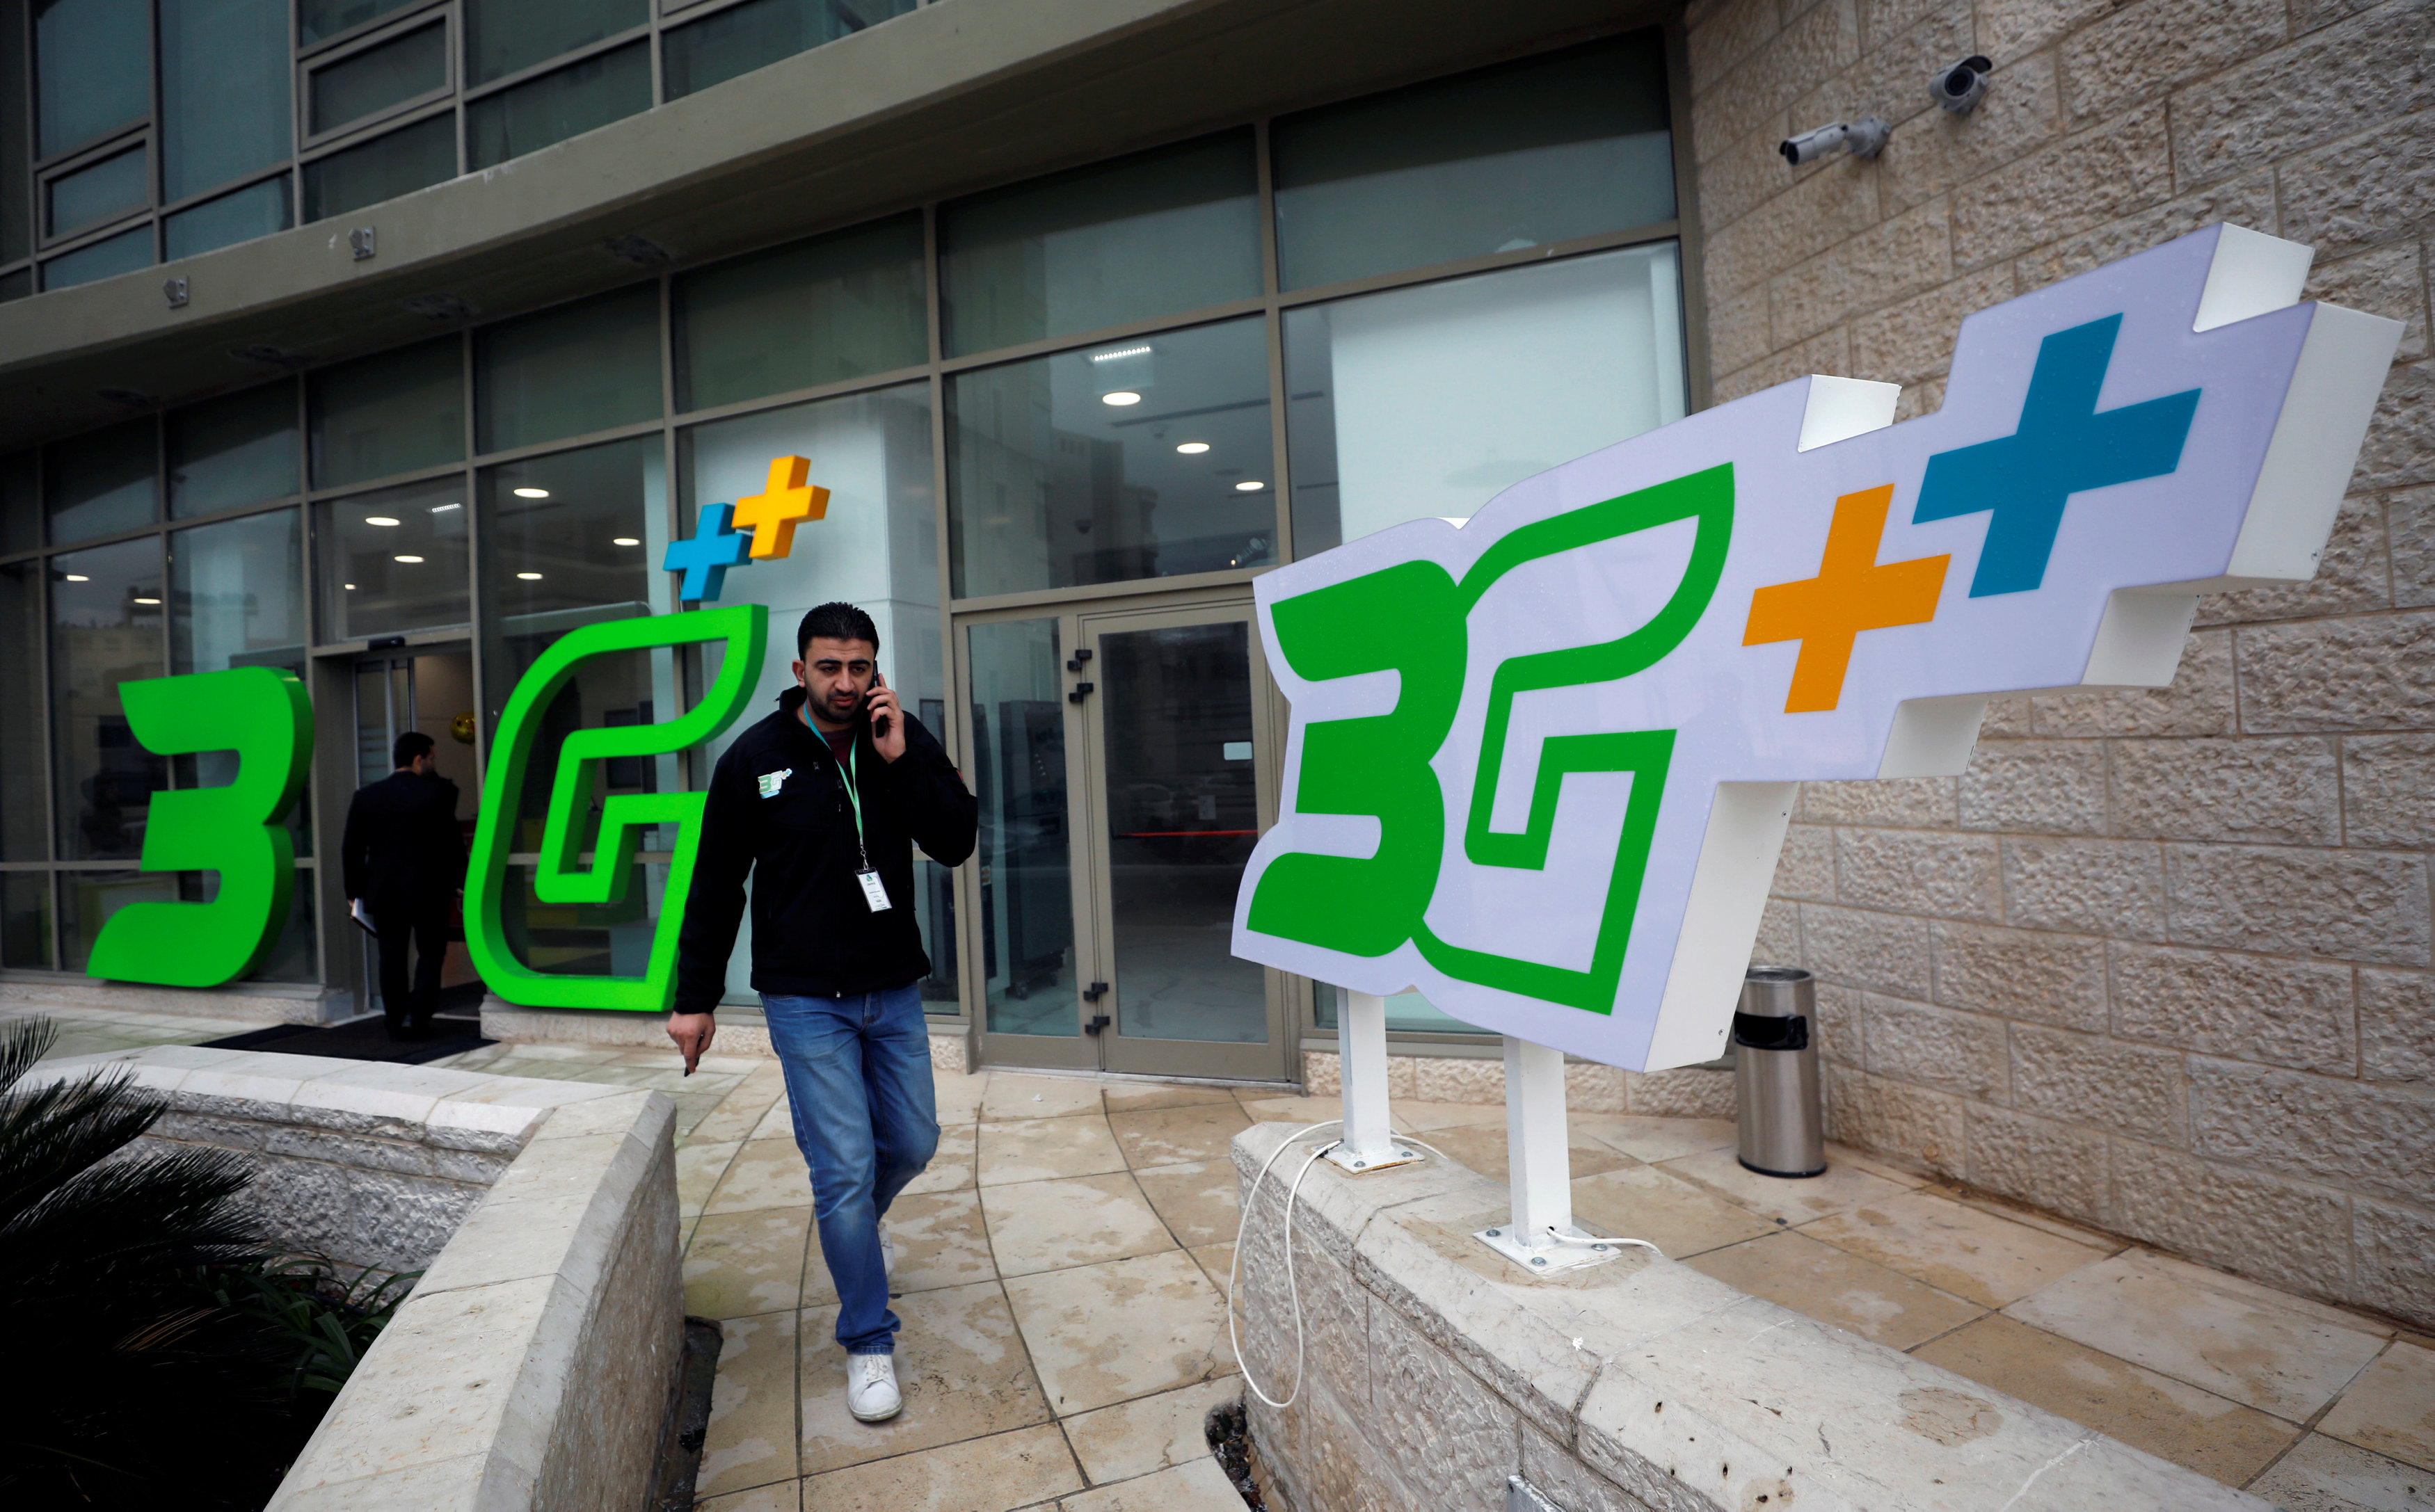 Palestinians get 3G mobile services